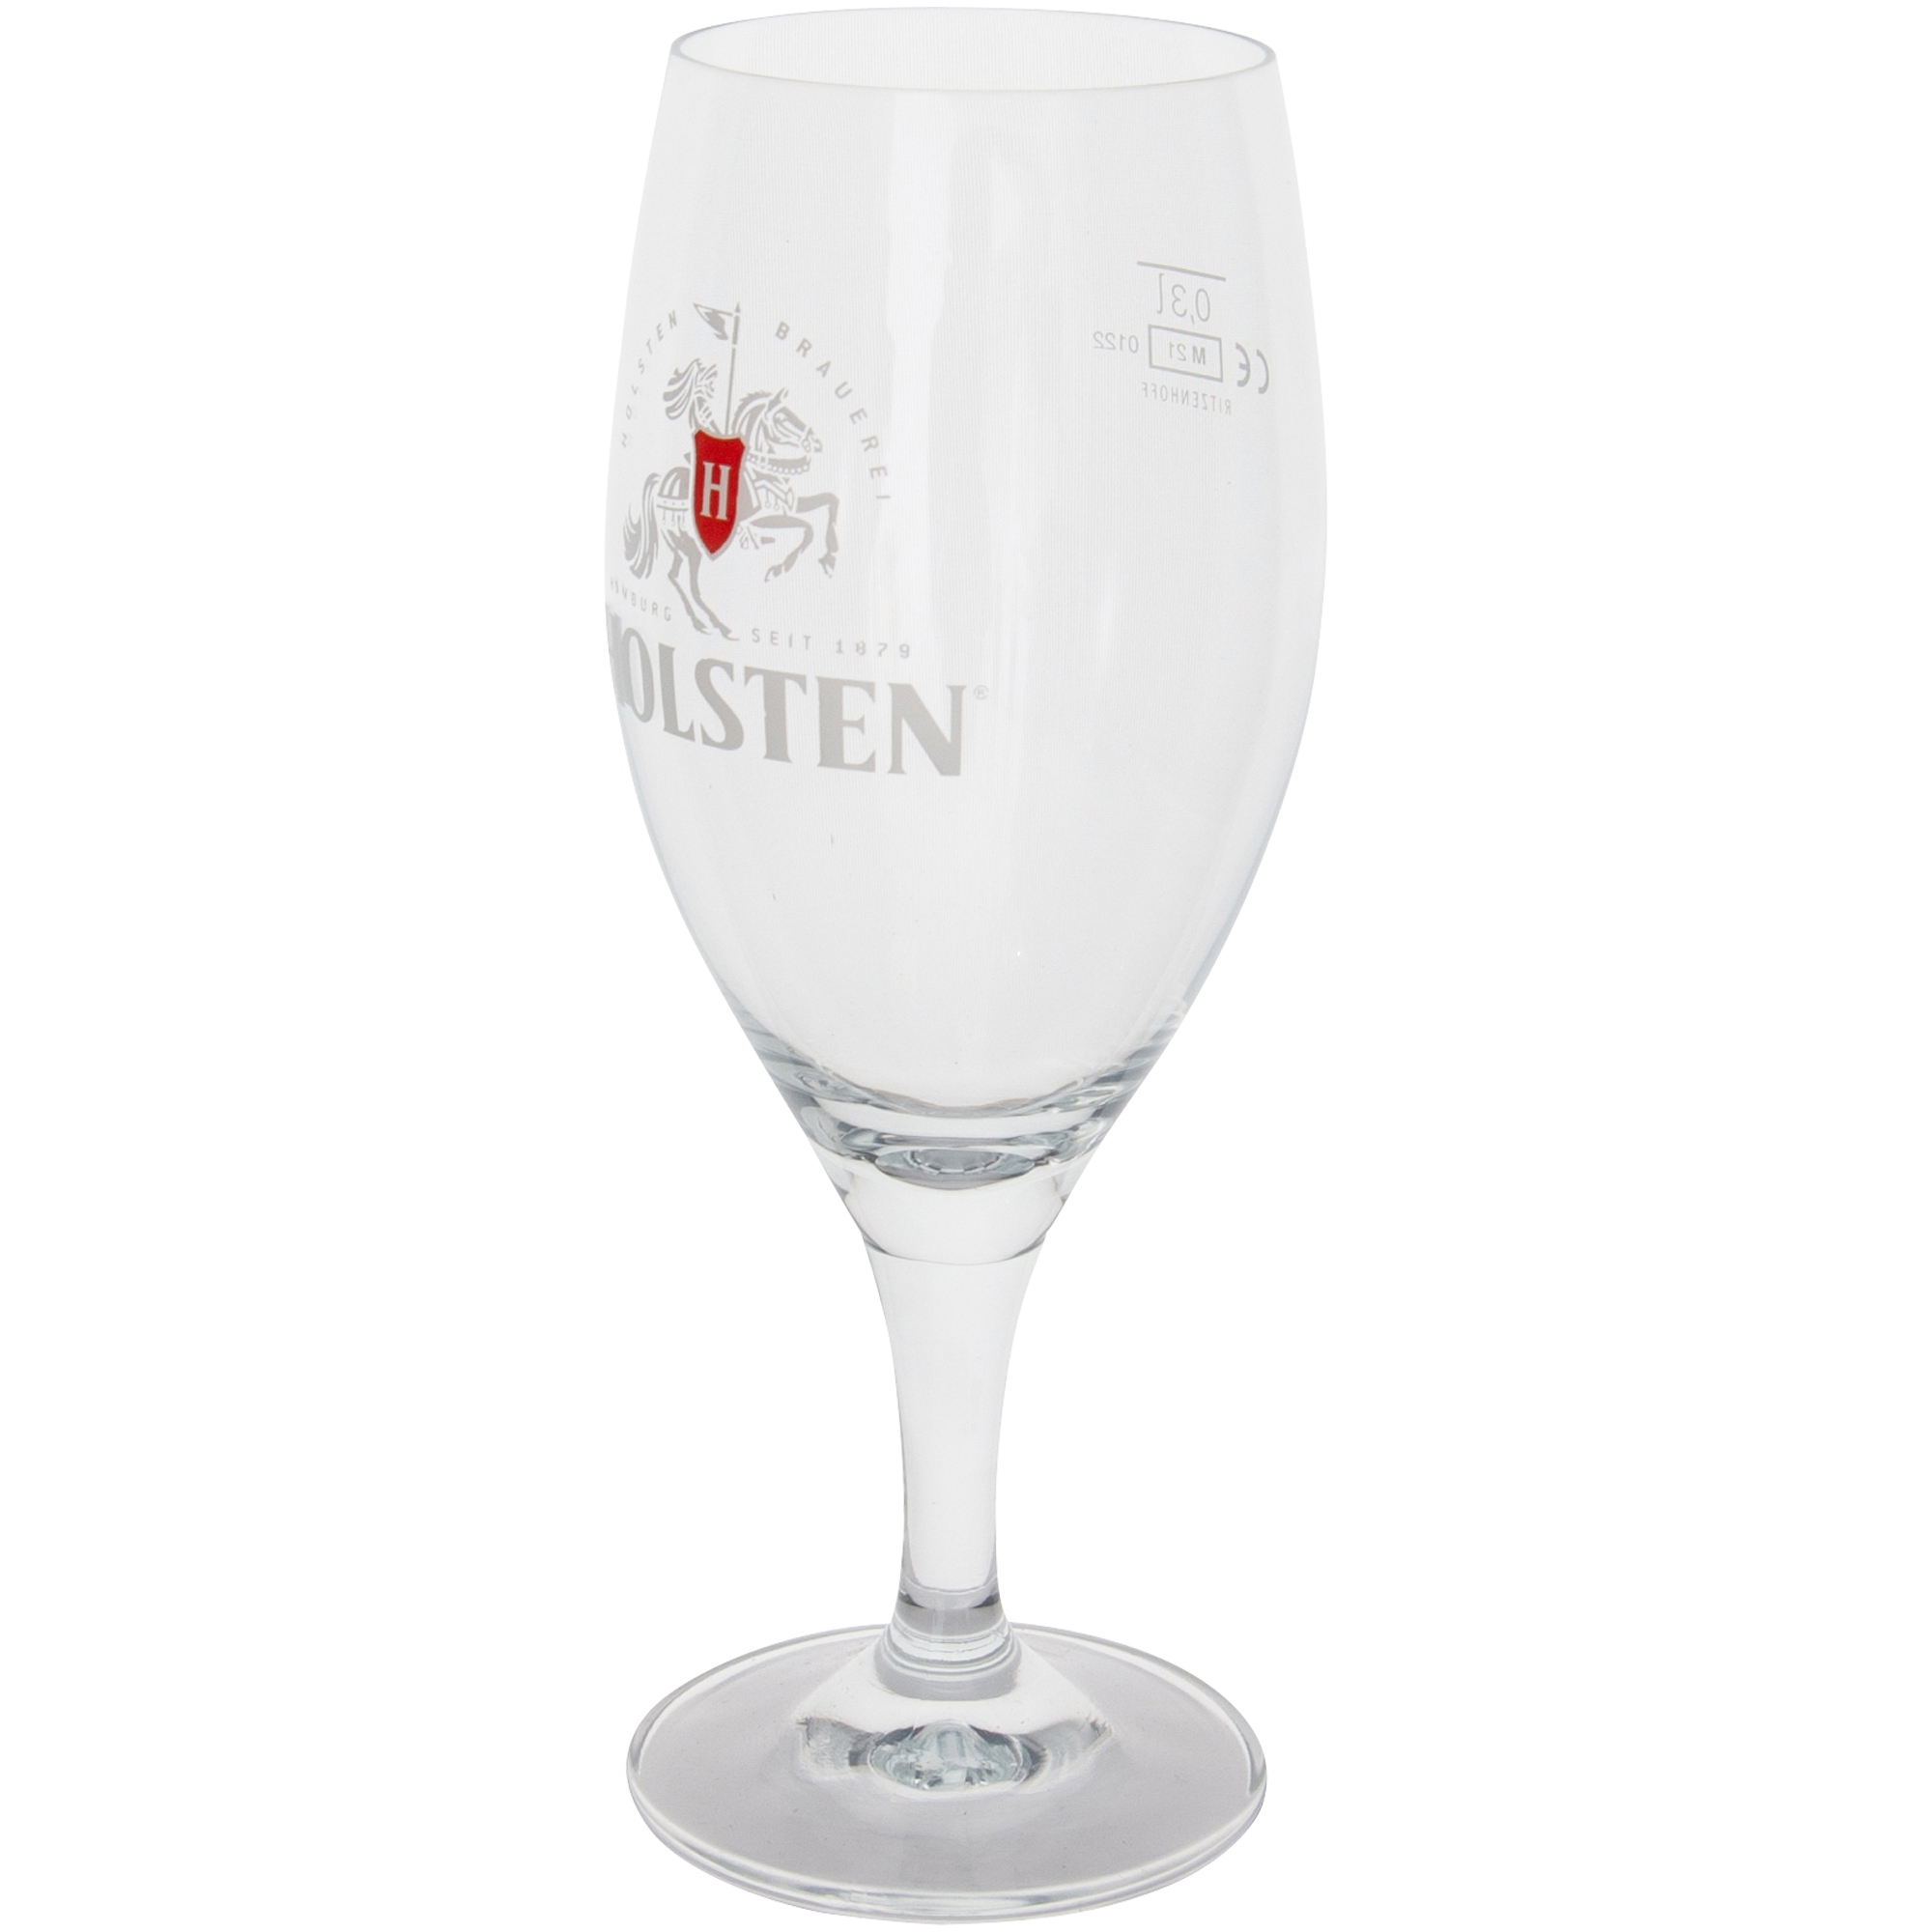 Holsten - Beer Glas Set - 6 pieces